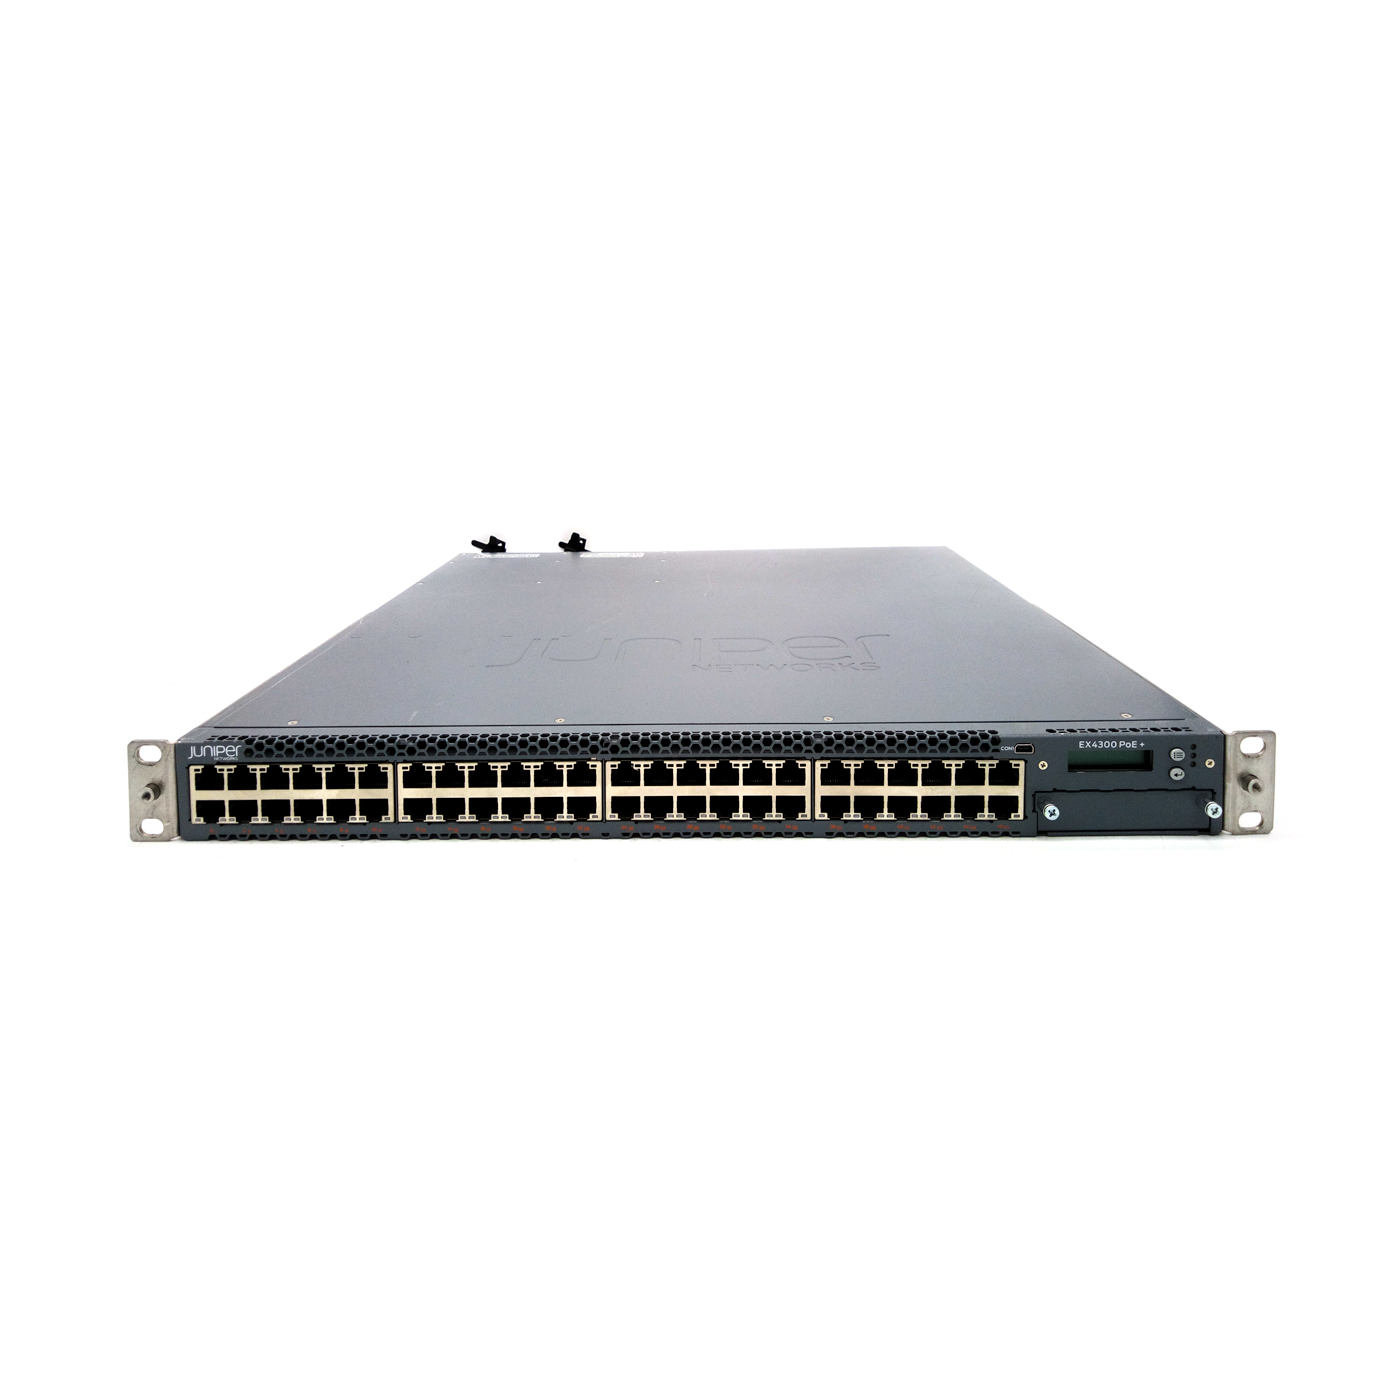 Juniper EX4300-48T 48-Port 10/100/1000BASE-T Switch, 1x POWER SUPPLY